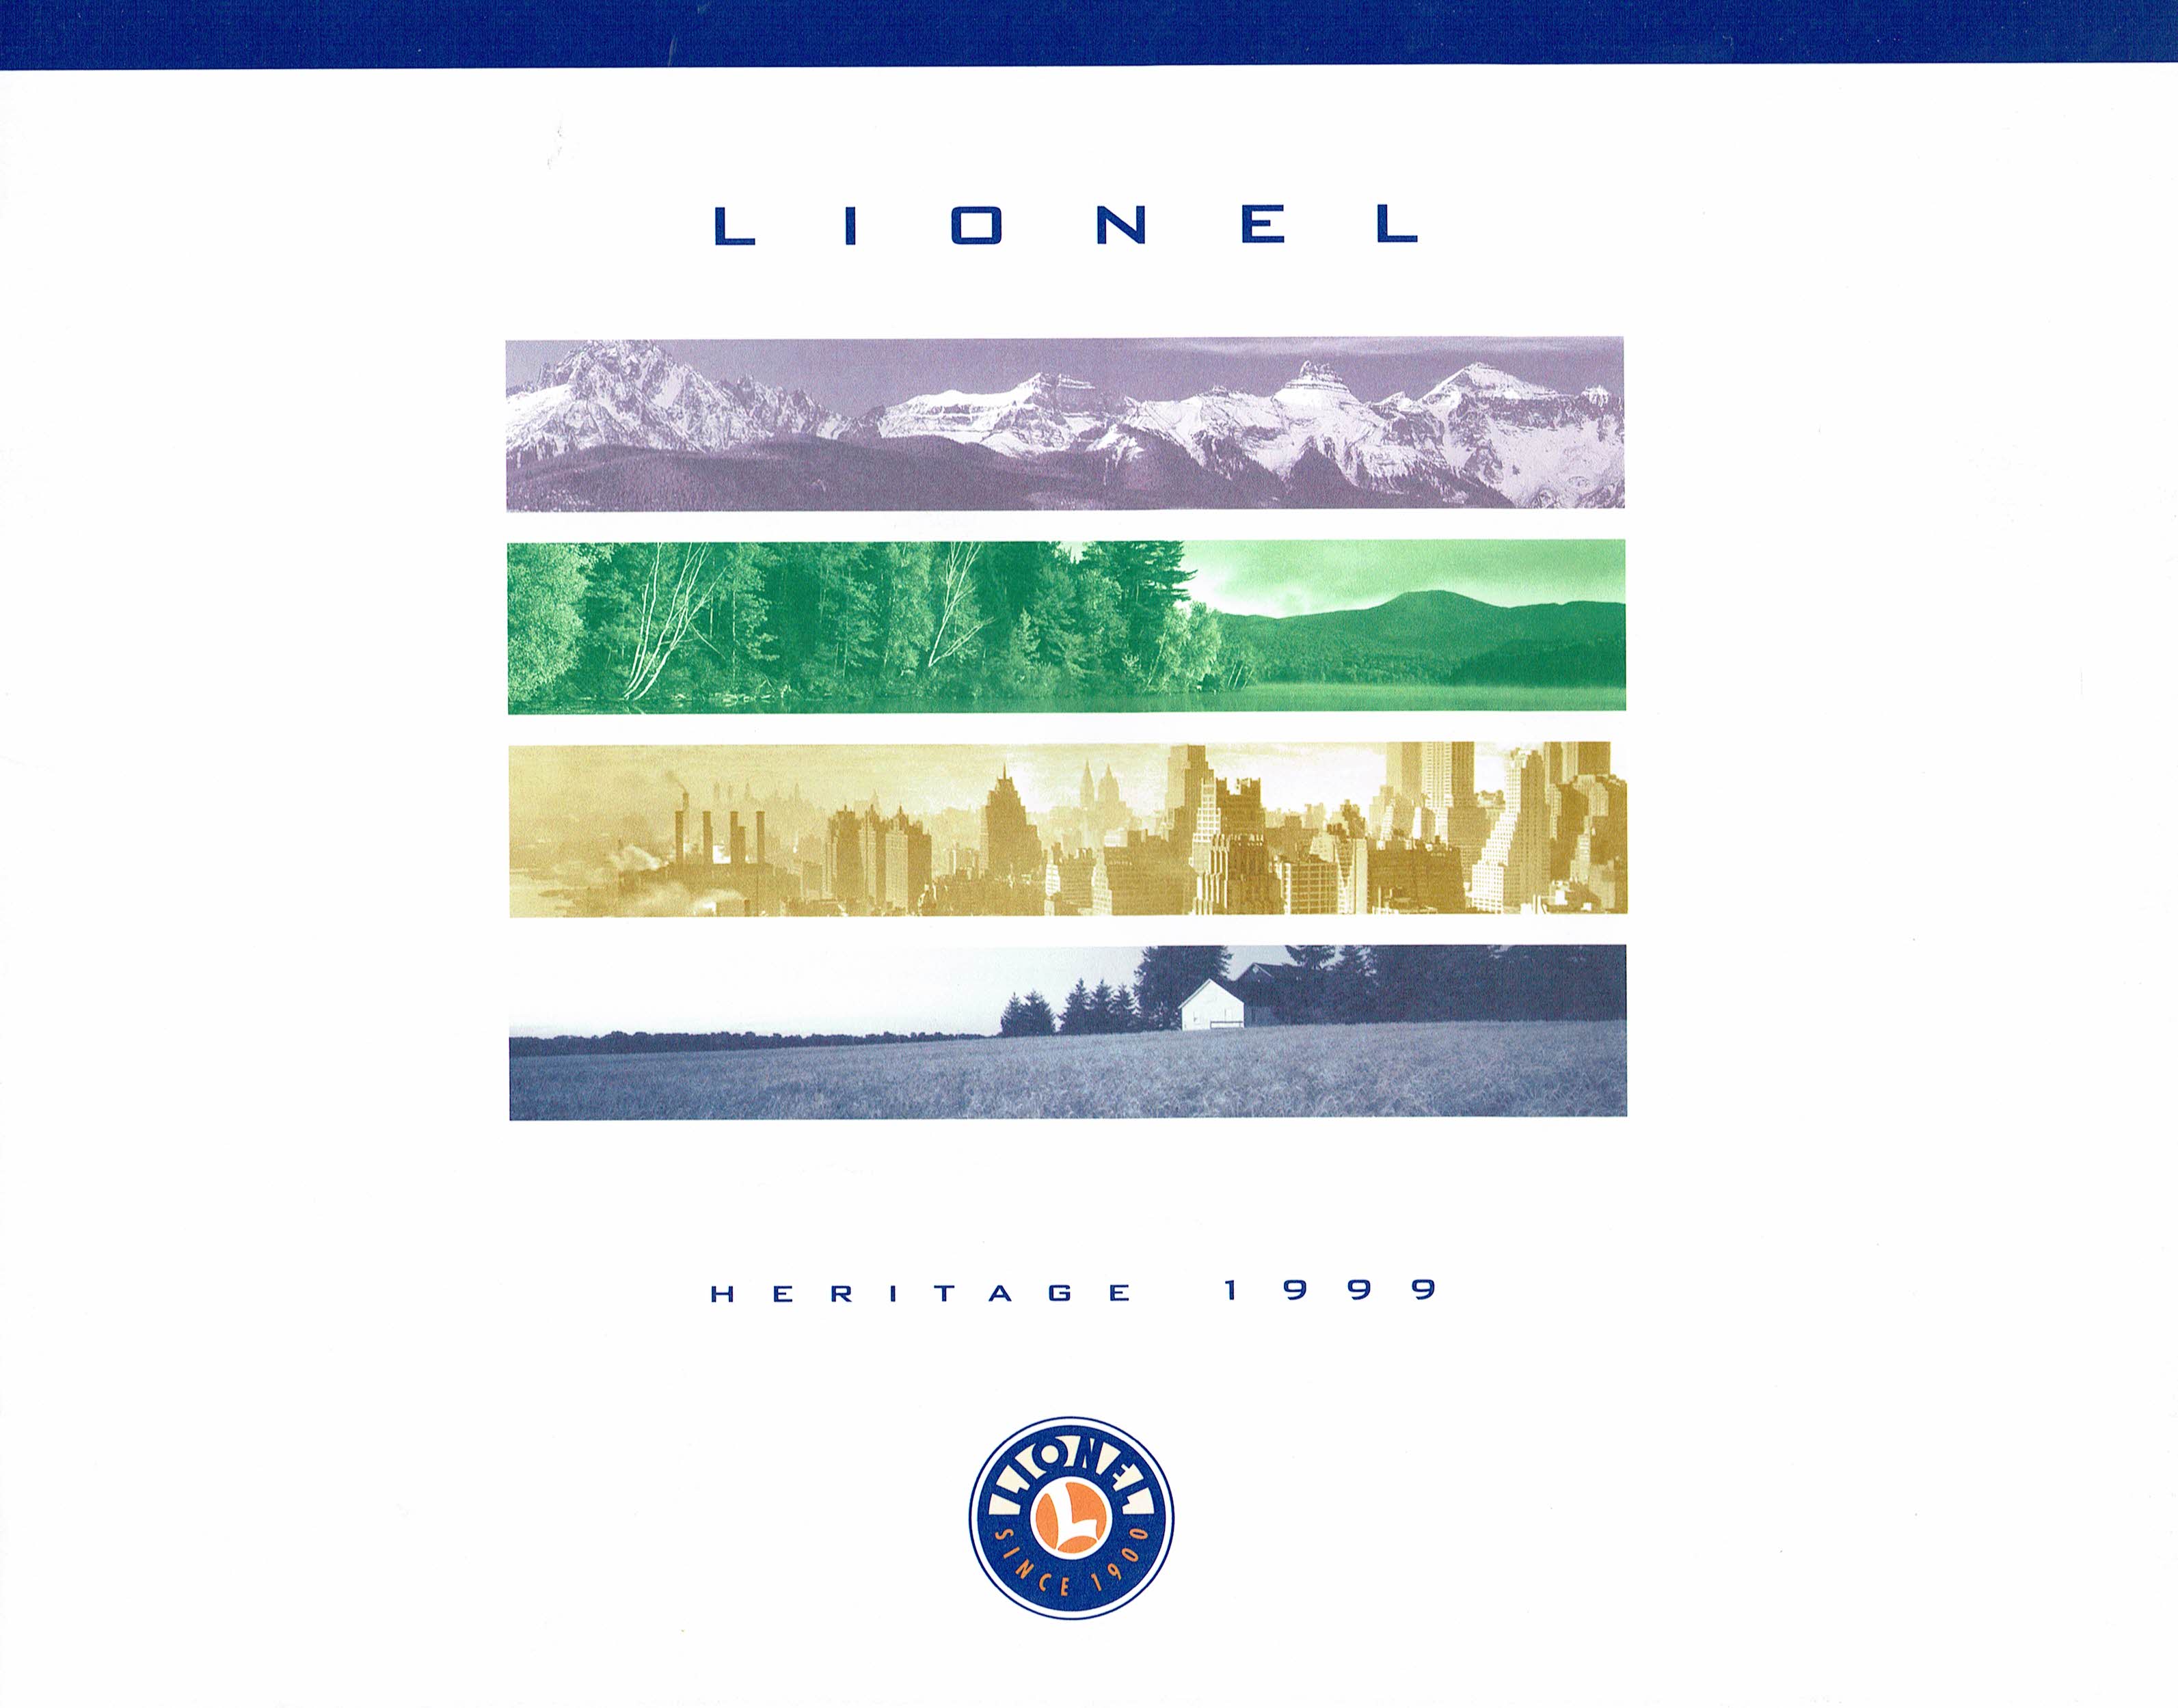 Lionel 1999 Heritage Catalog image